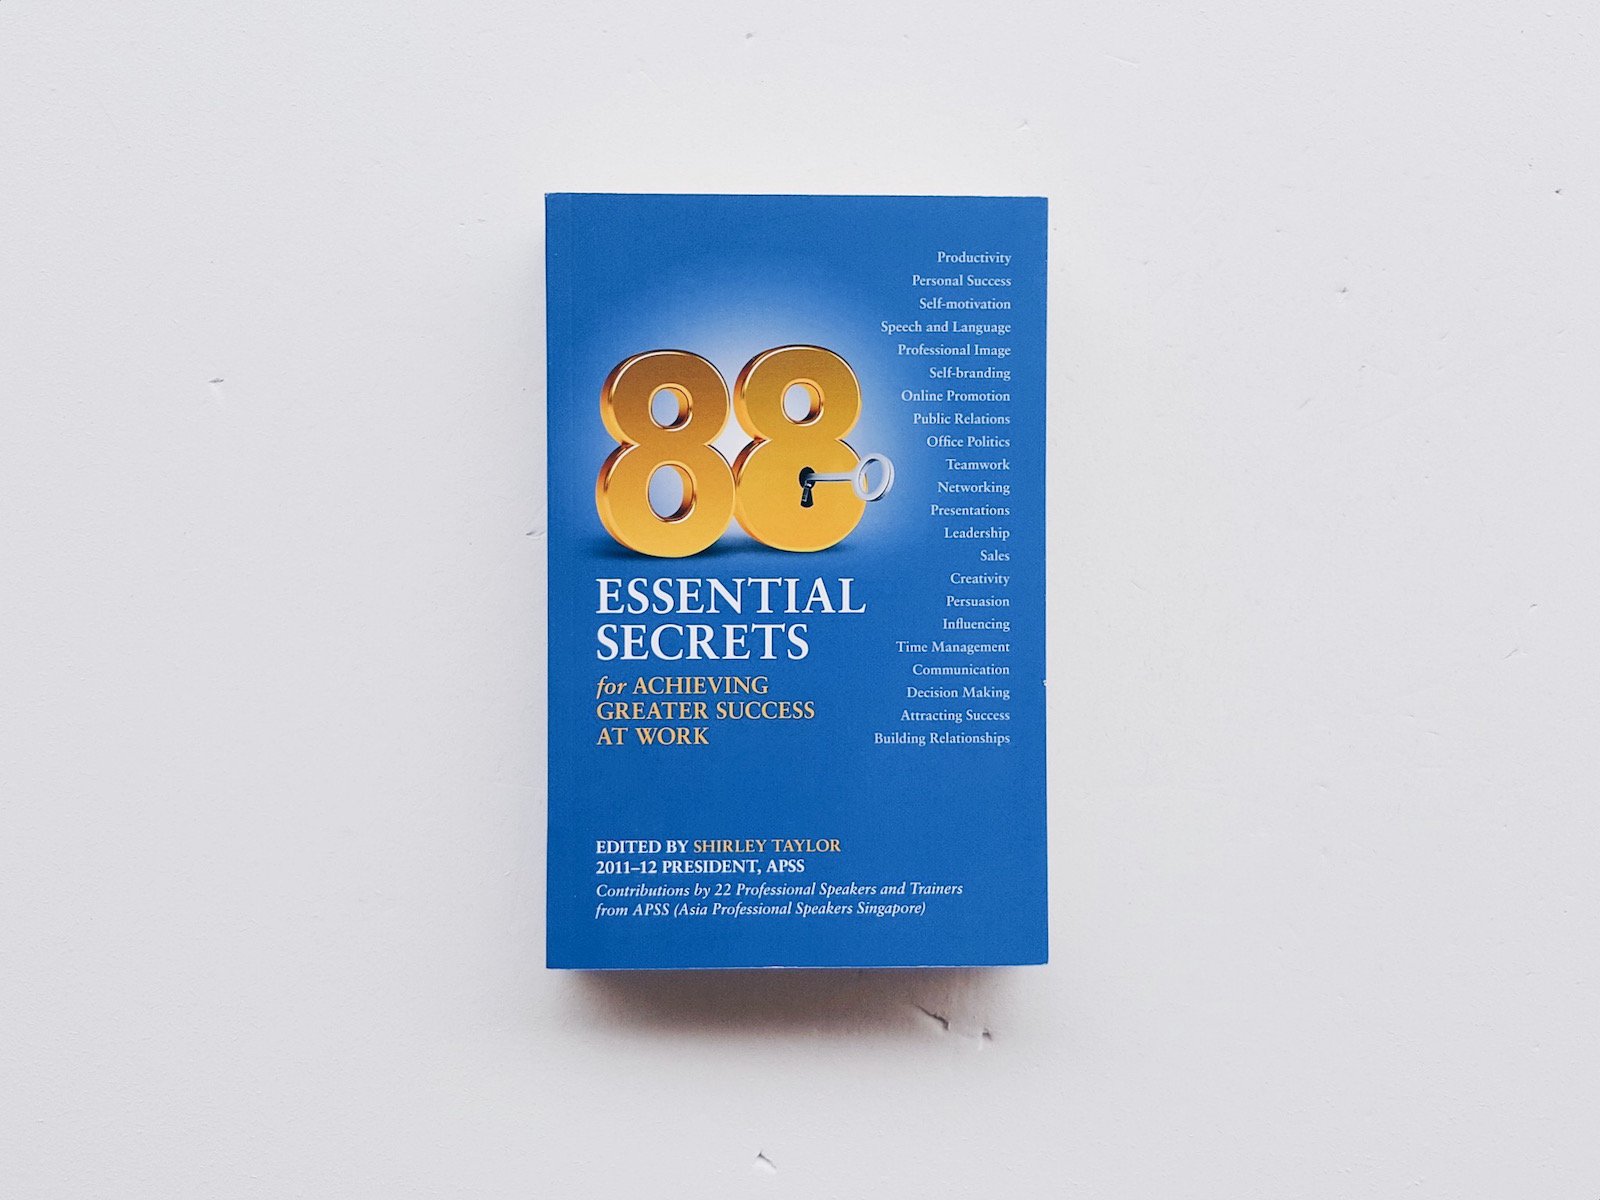 88 Essential Secrets